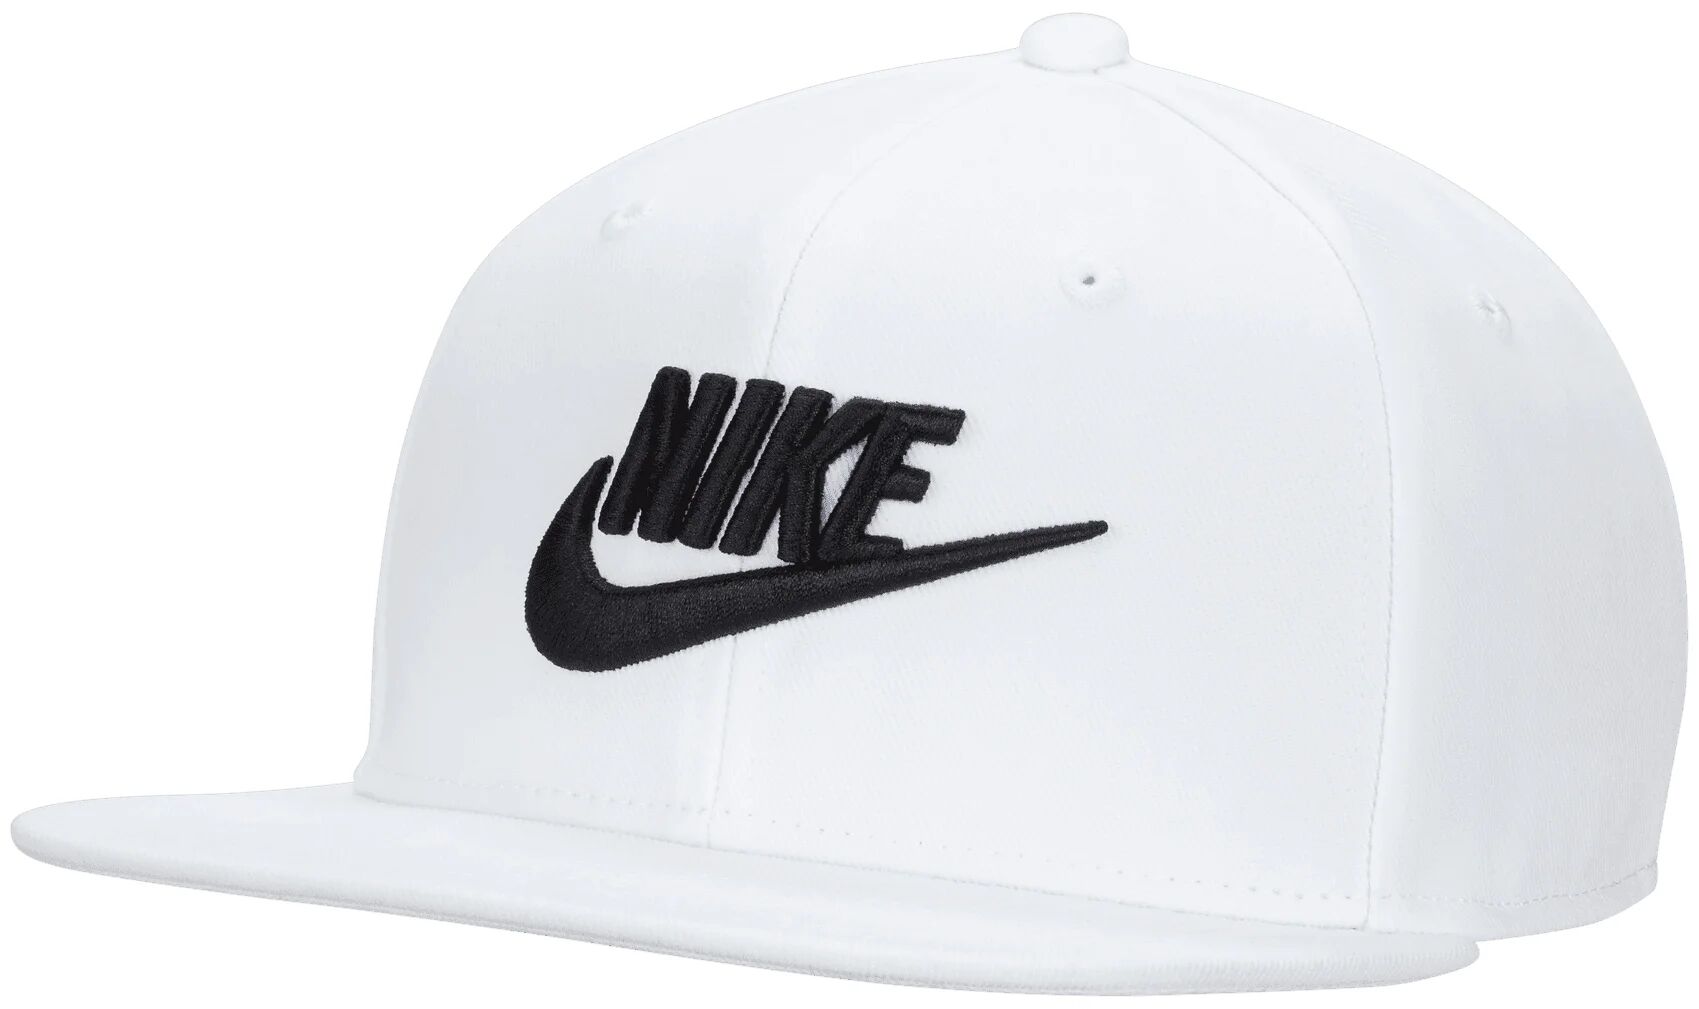 Nike Dri-FIT Pro Structured Futura Men's Golf Hat - White, Size: Small/Medium